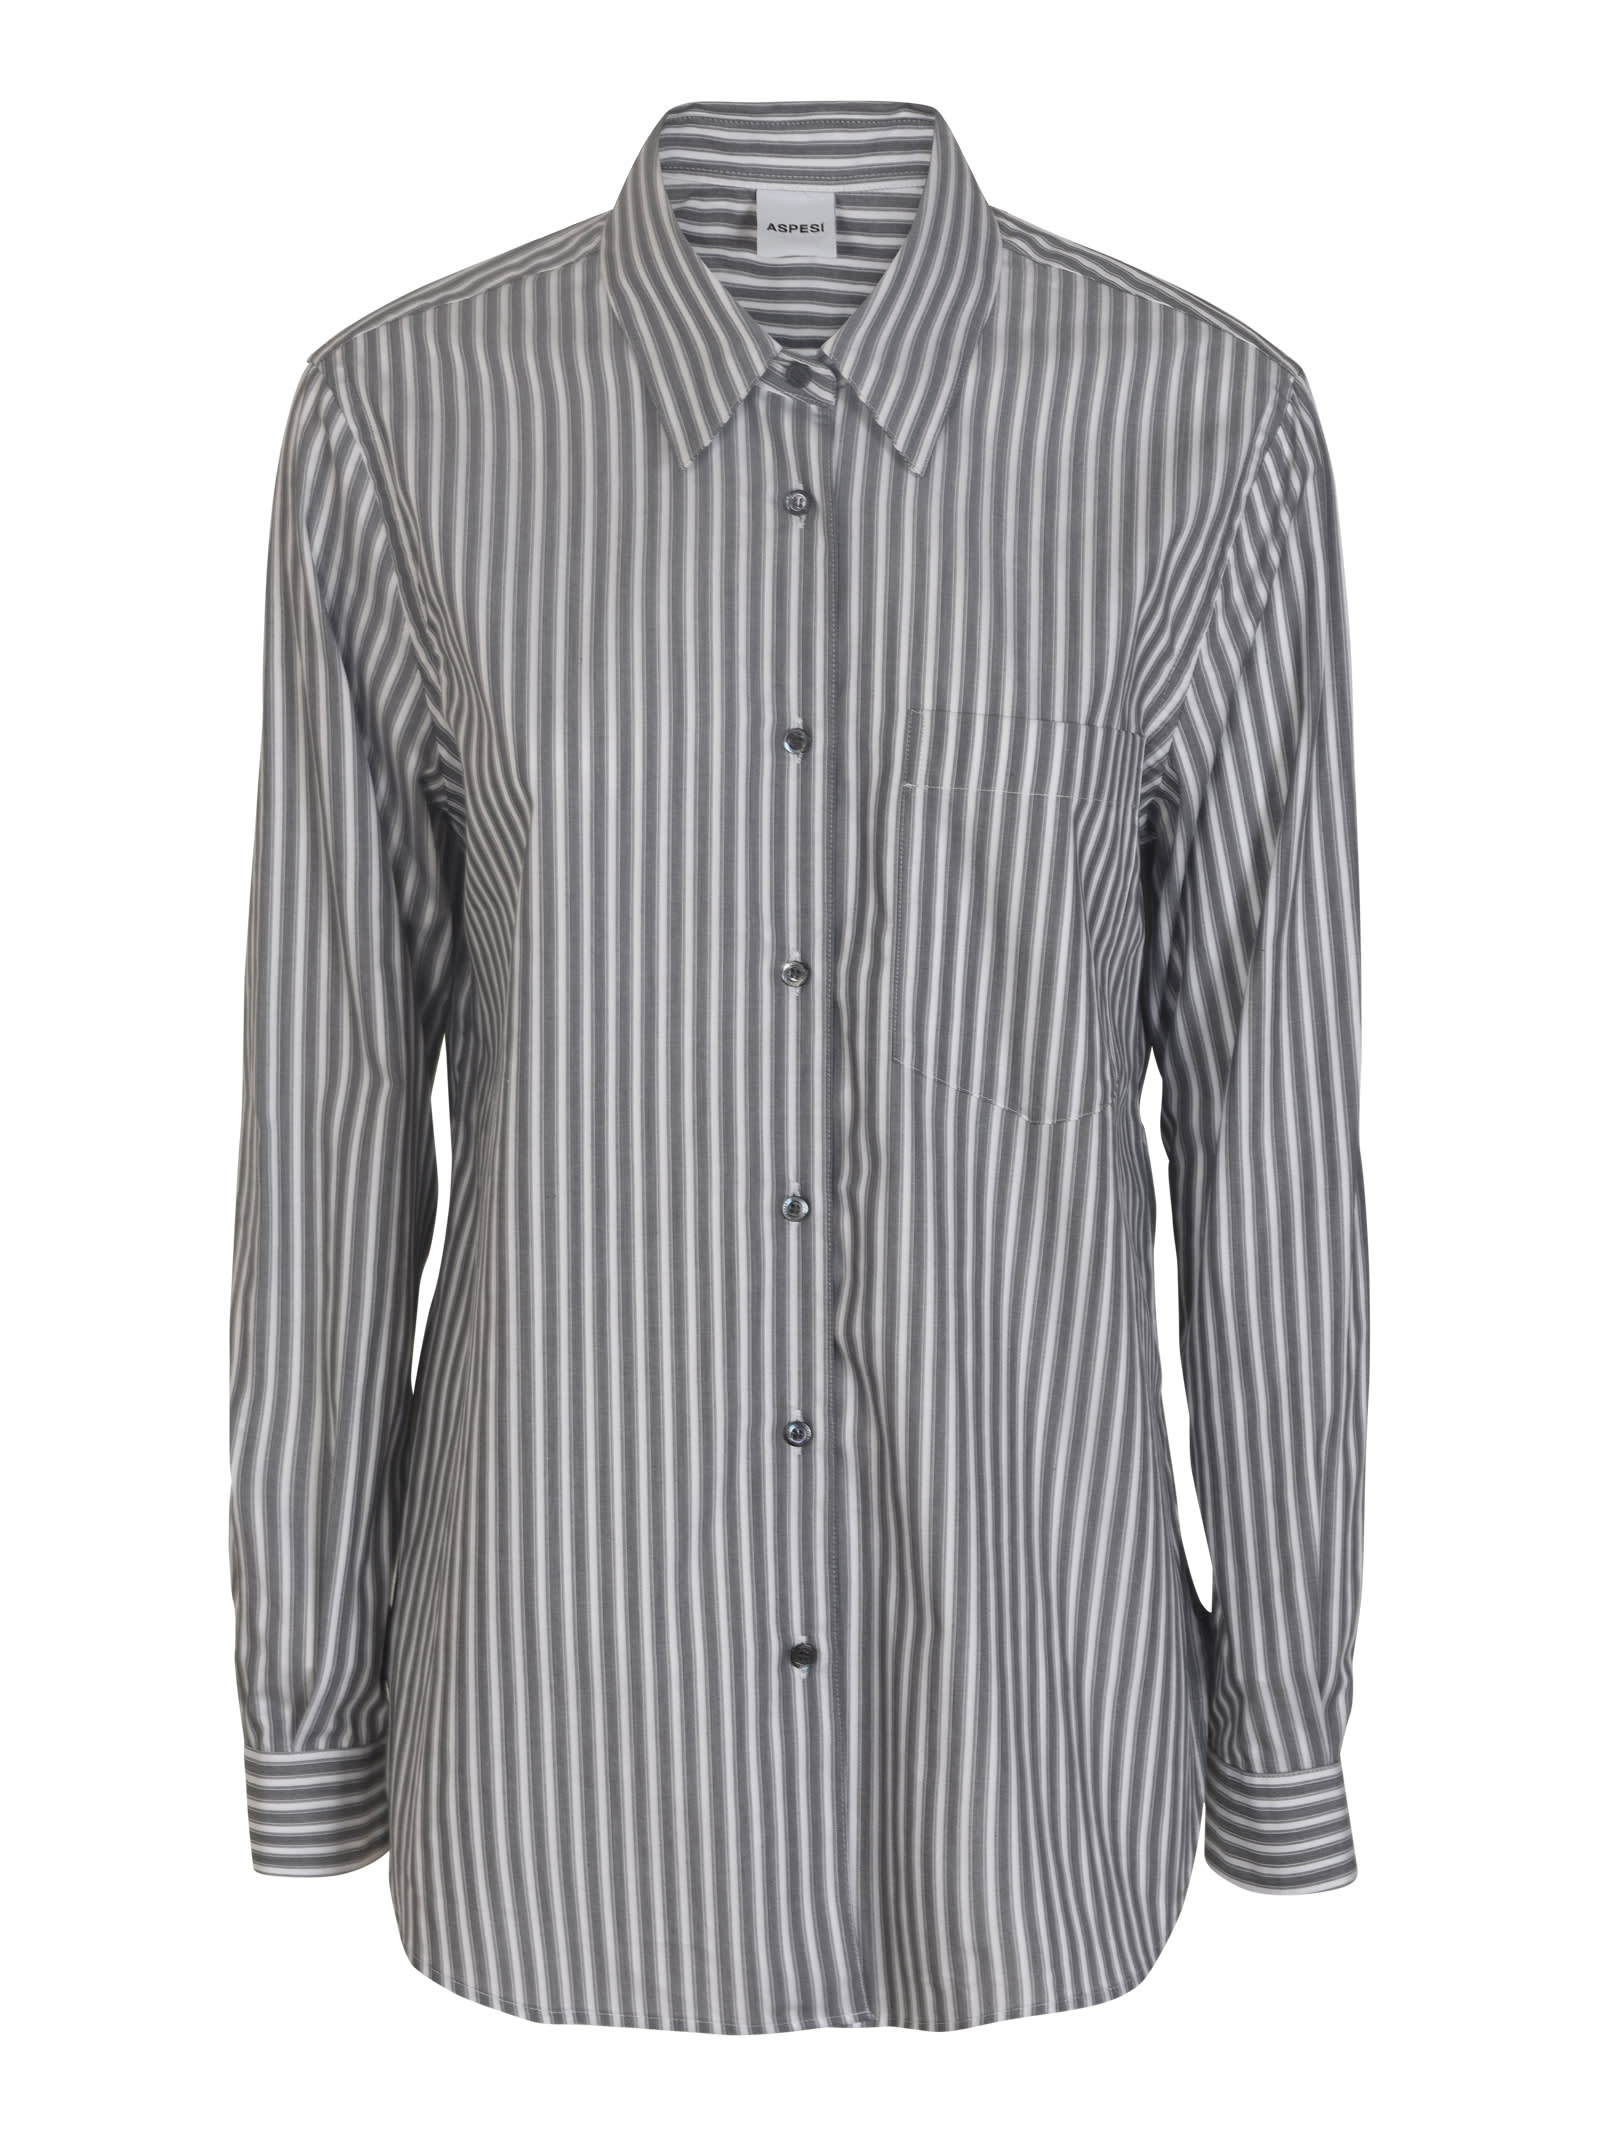 Aspesi Round Hem Striped Shirt In Stripe Gray